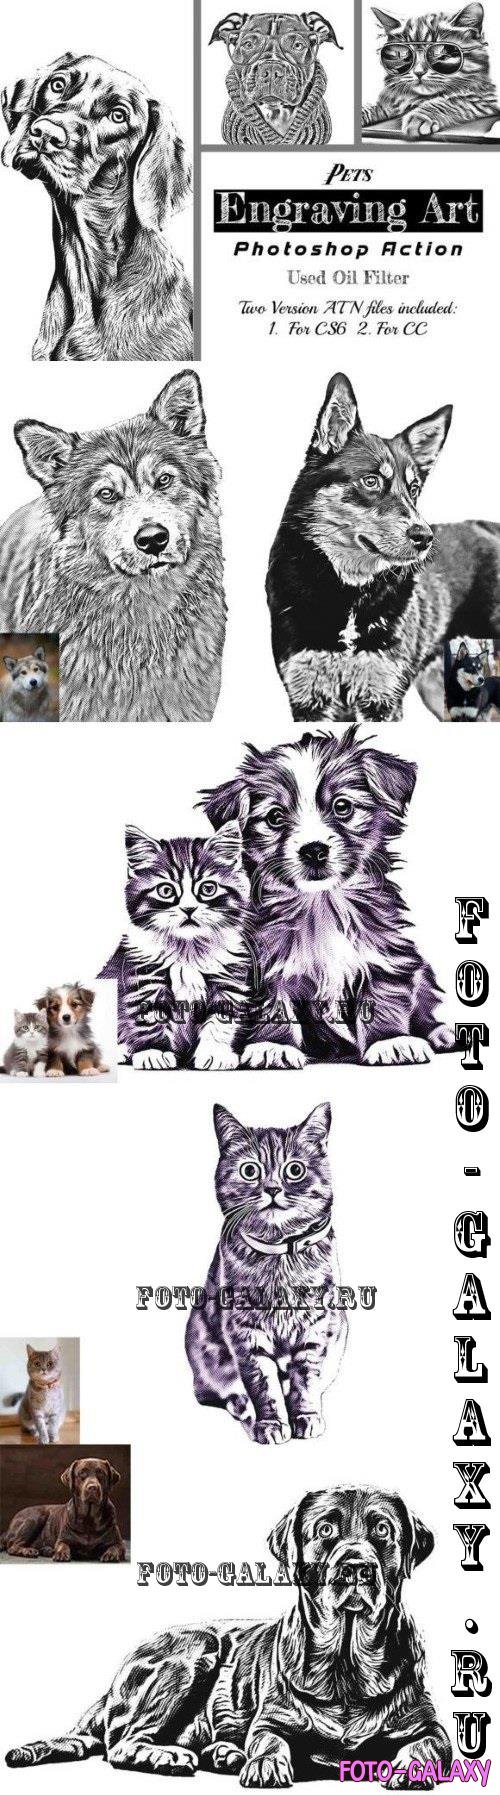 Pets Engraving Art Photoshop Action - 92032571